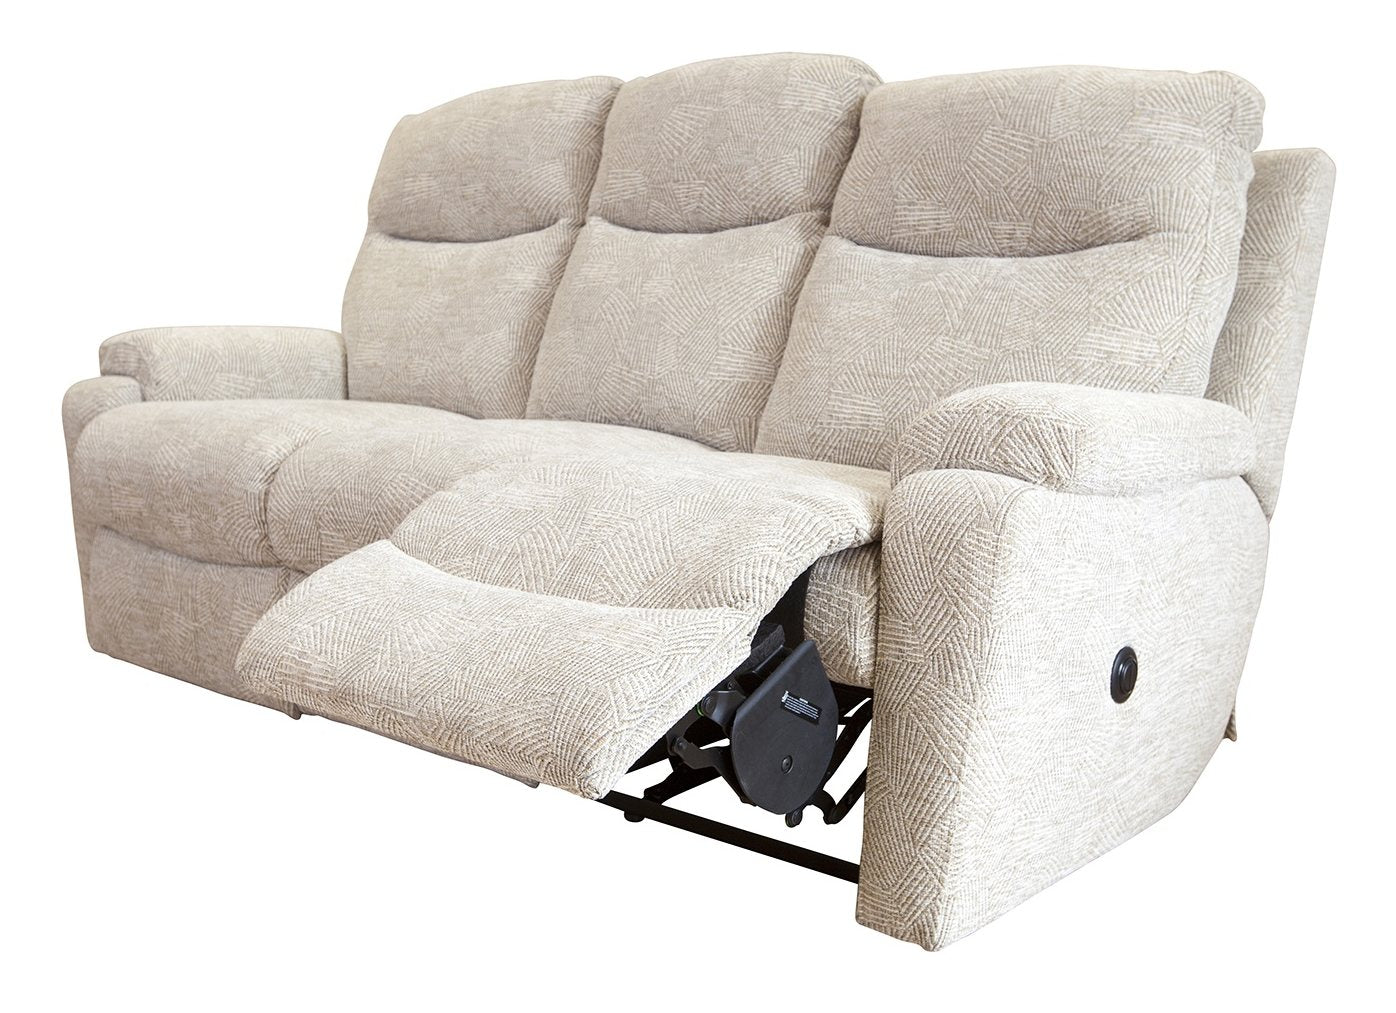 The Townsend Range - 3 Seater Sofa